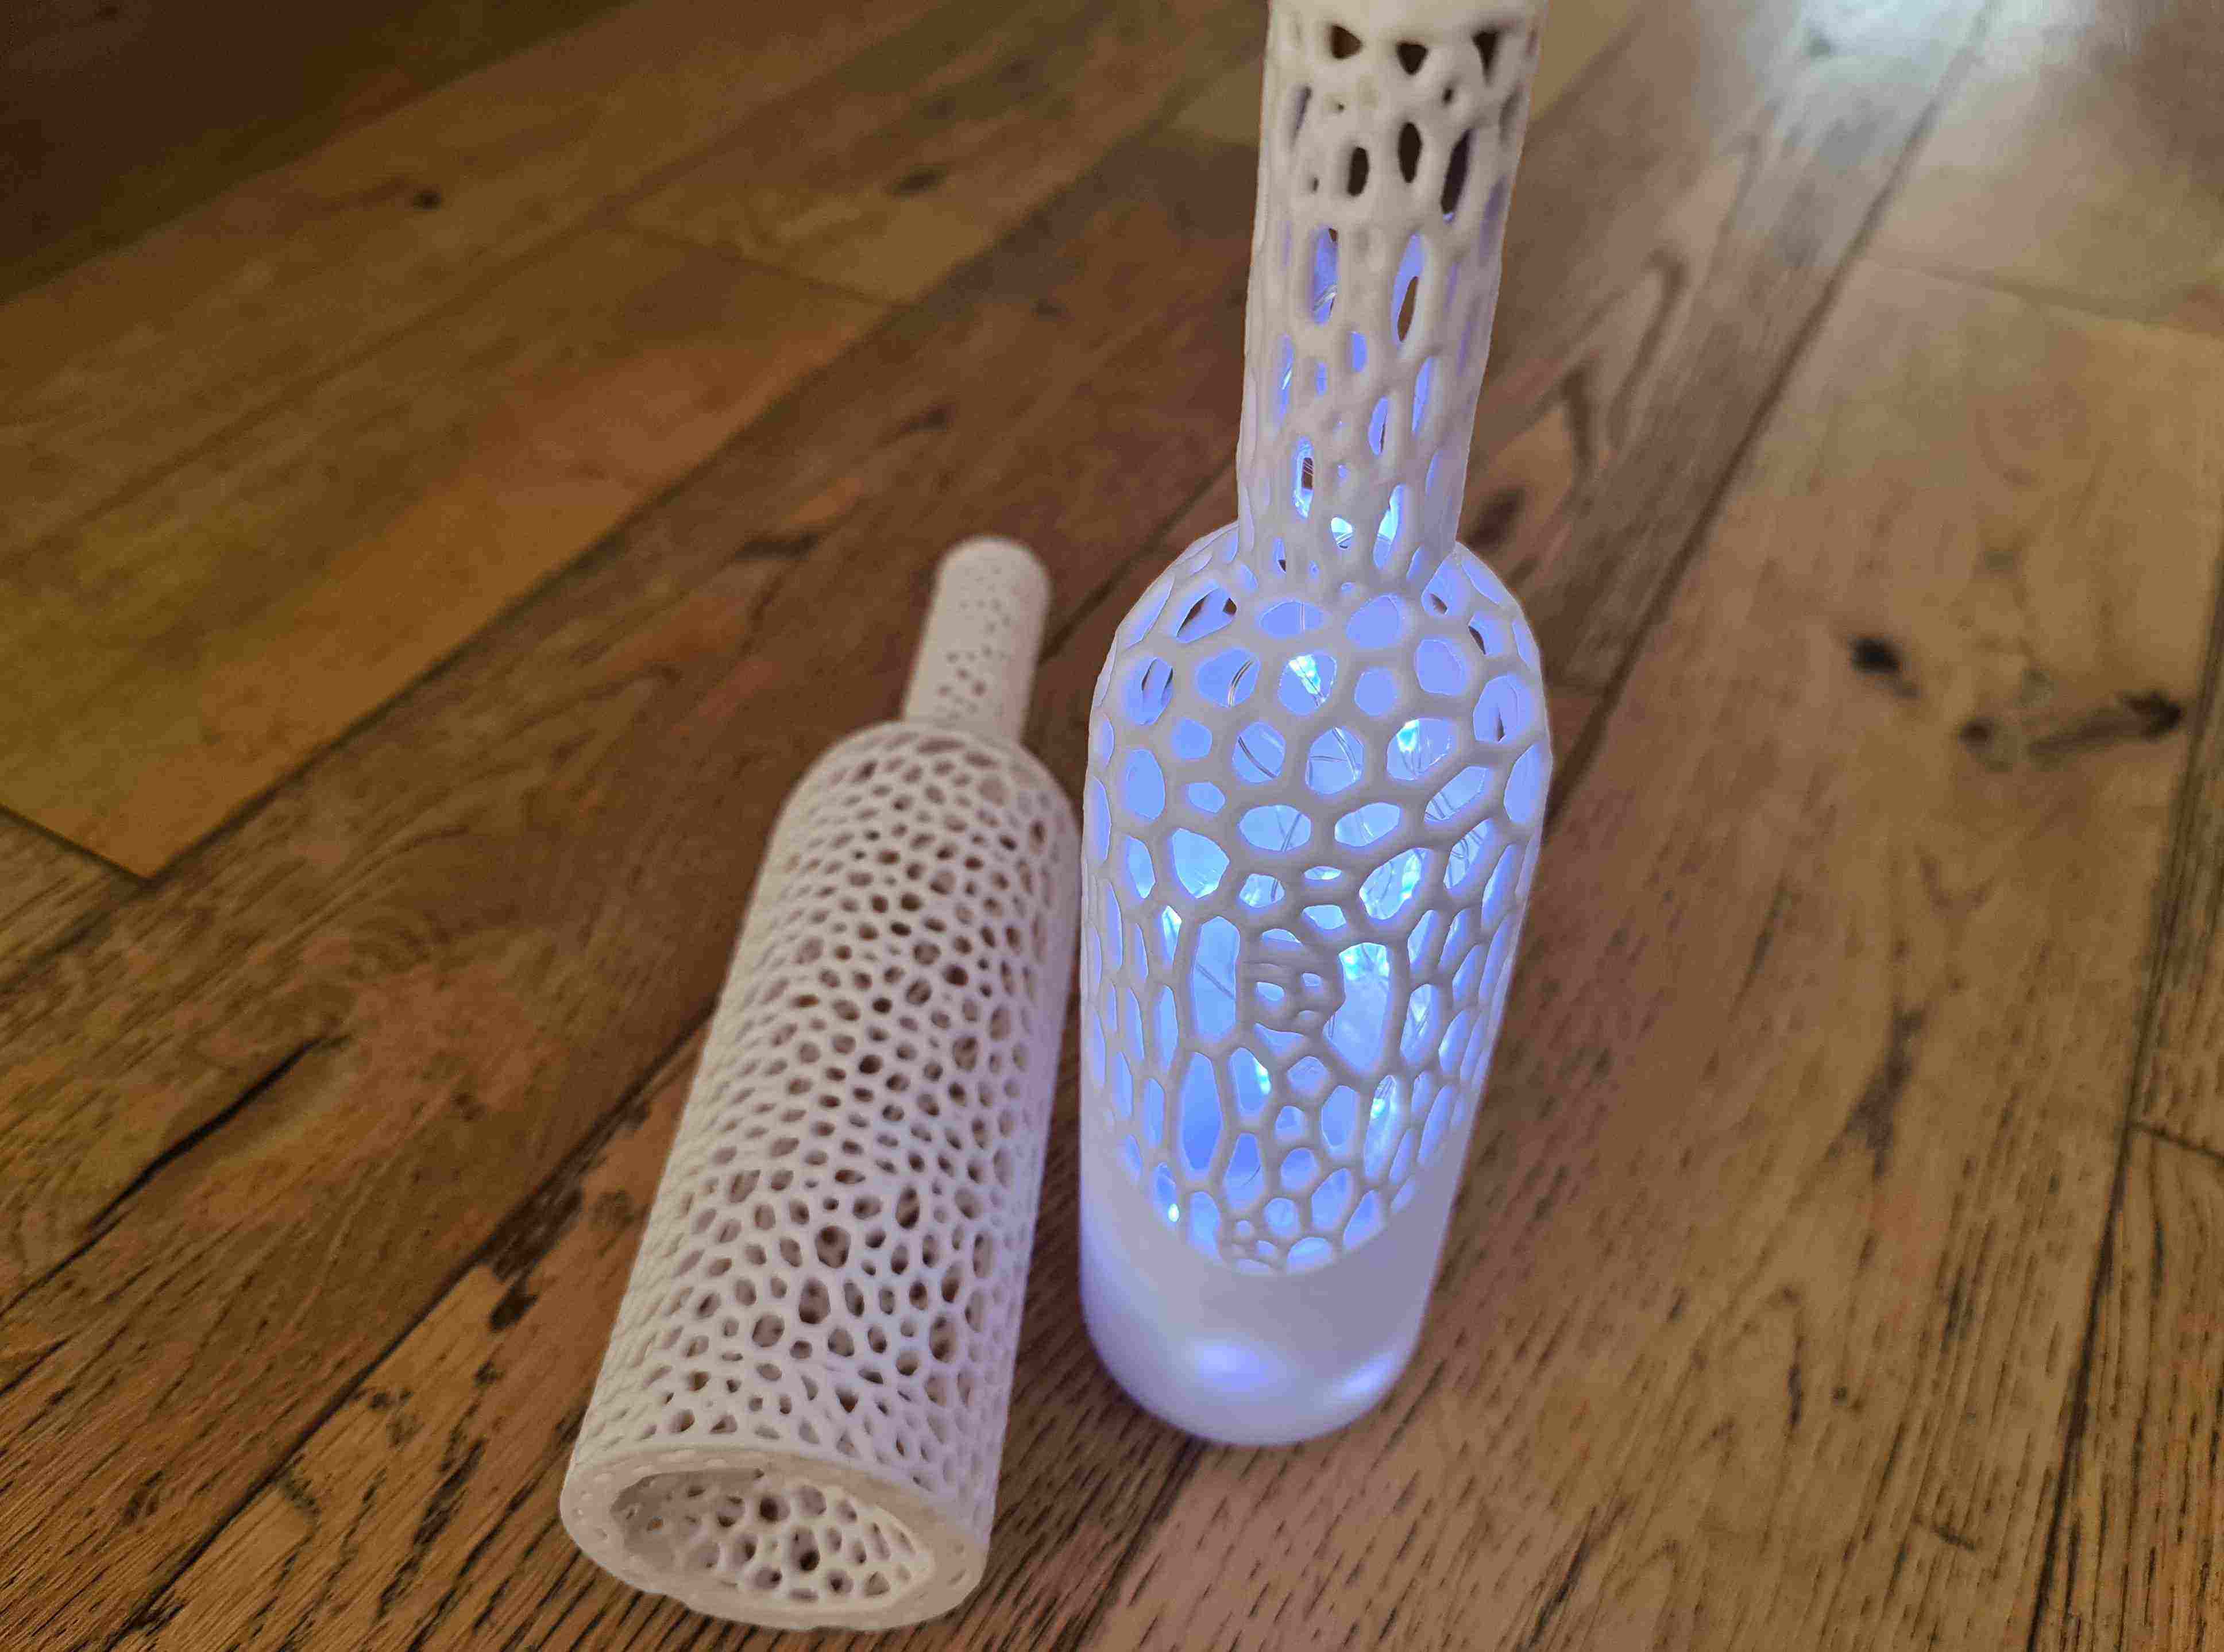 Voronoi Wine Vin Bottle Organic Contemporary Sculpture